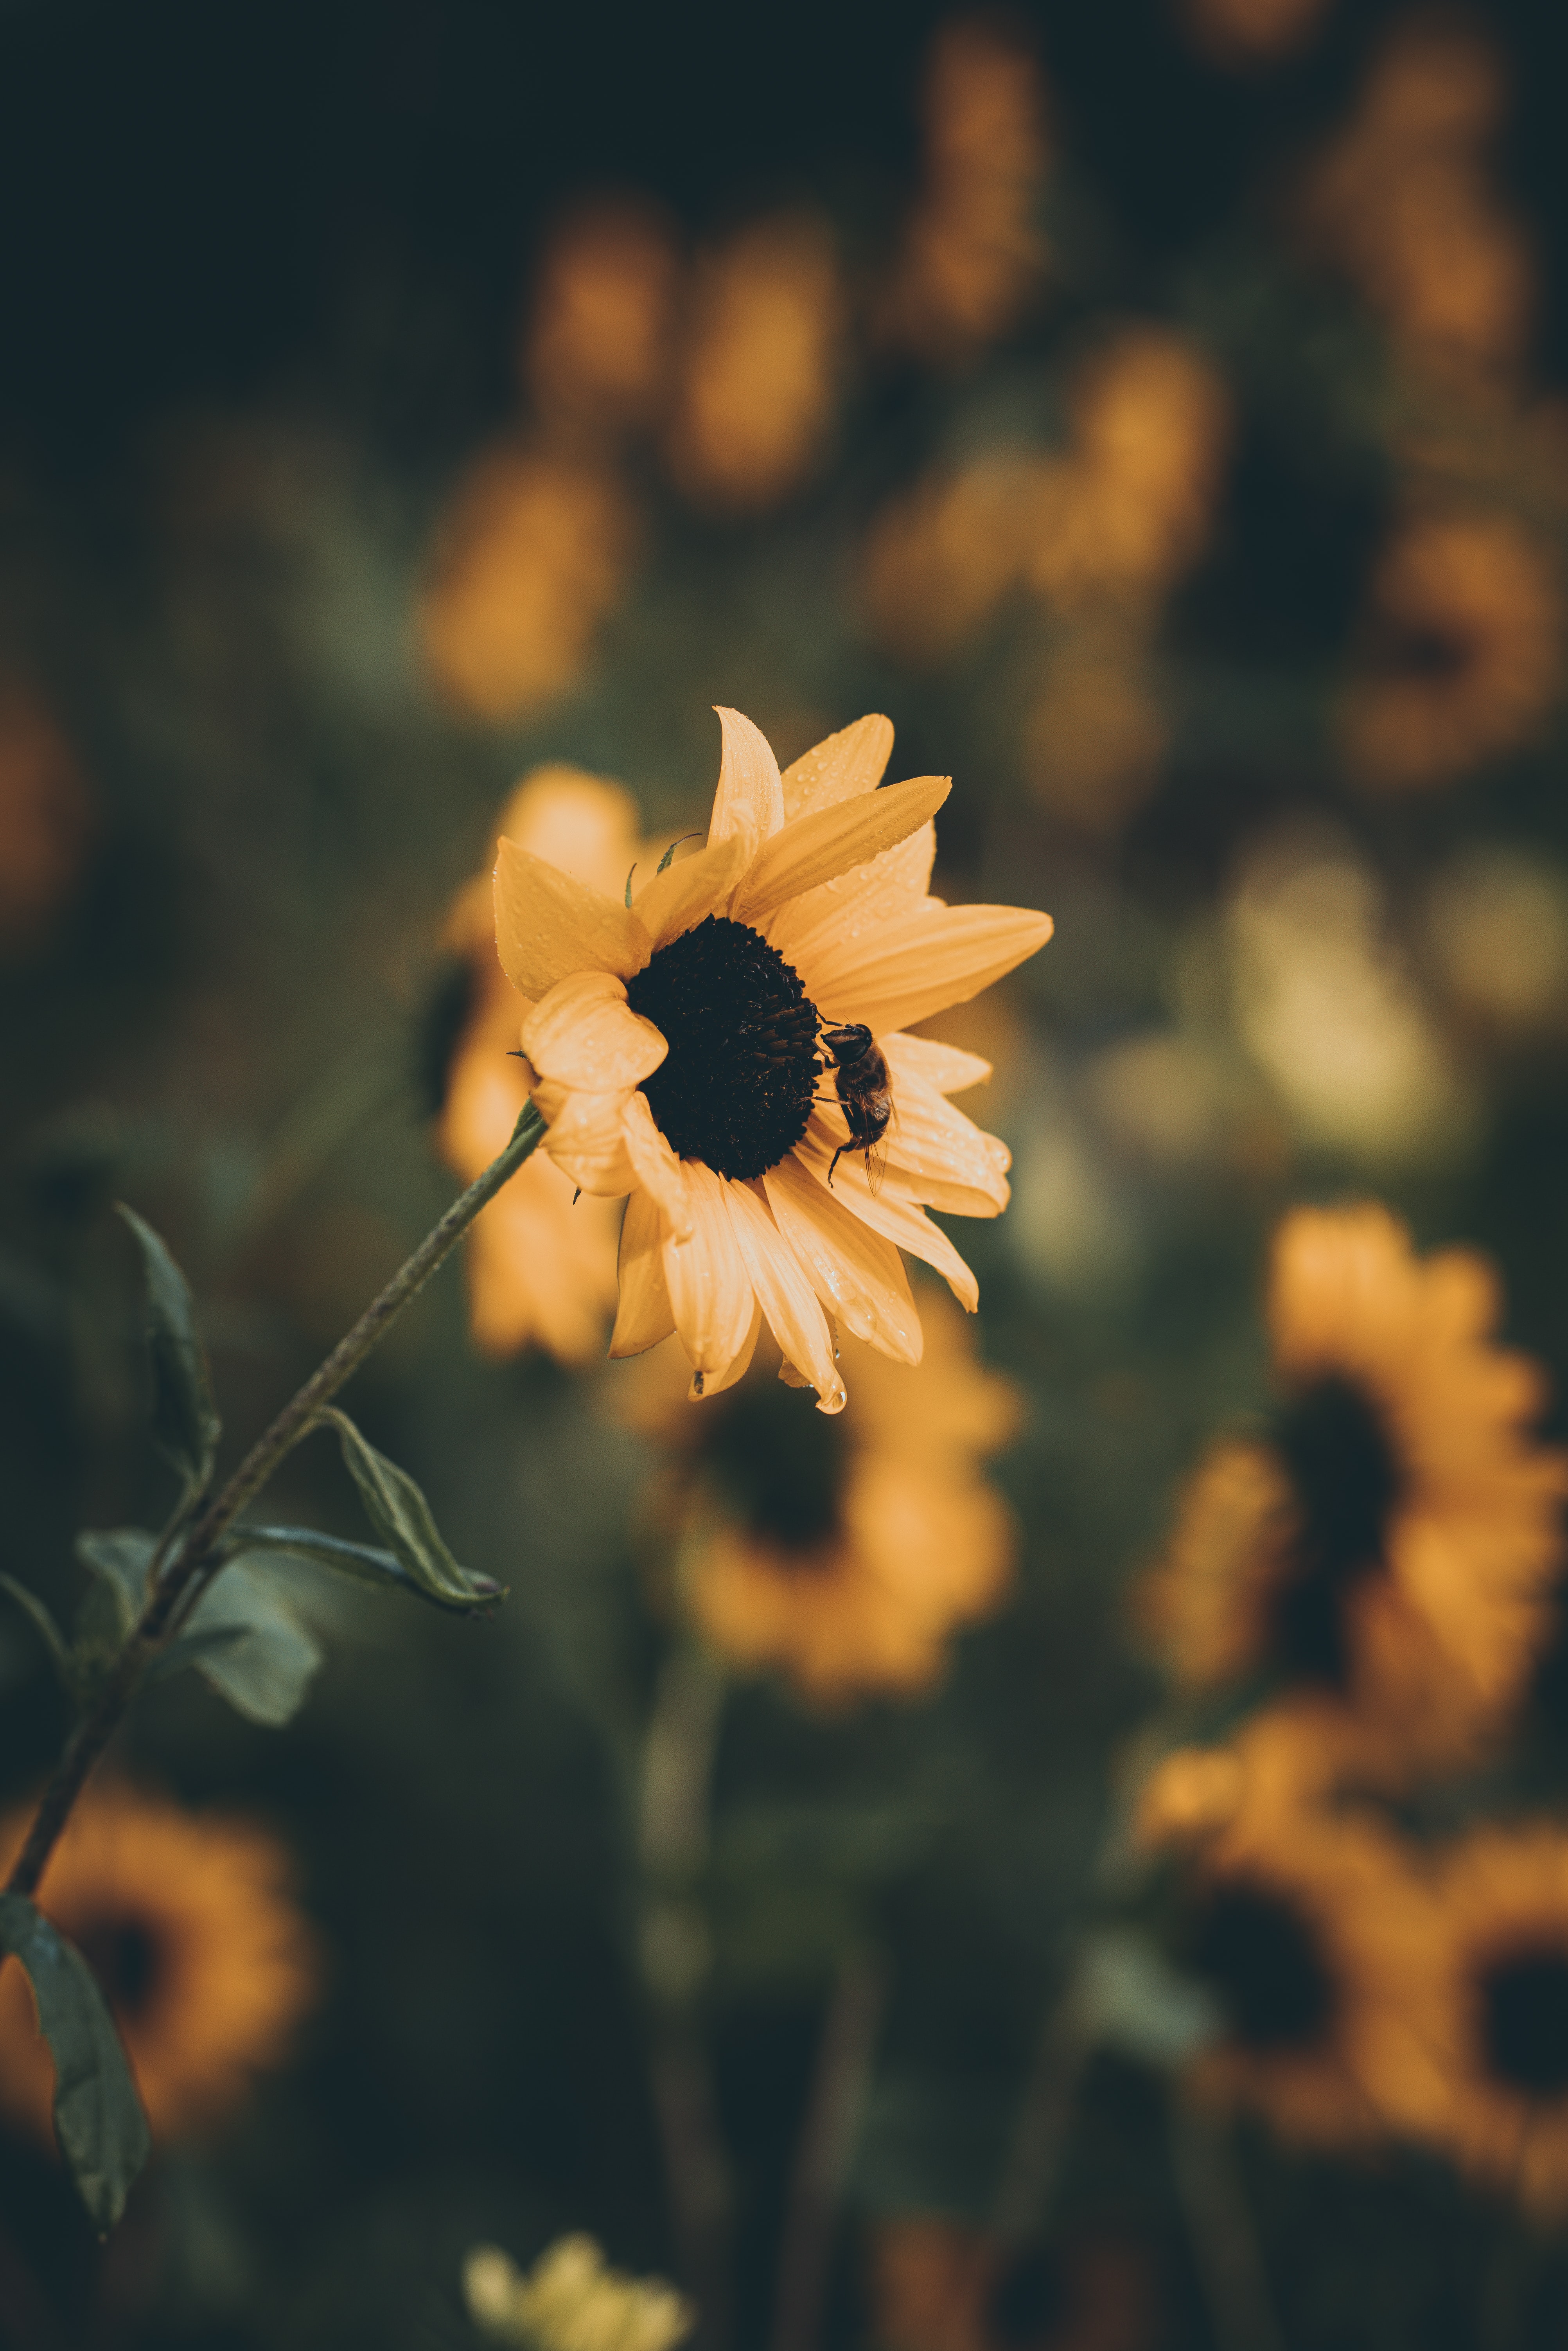 125249 descargar imagen flores, amarillo, flor, pétalos, abeja, girasol: fondos de pantalla y protectores de pantalla gratis